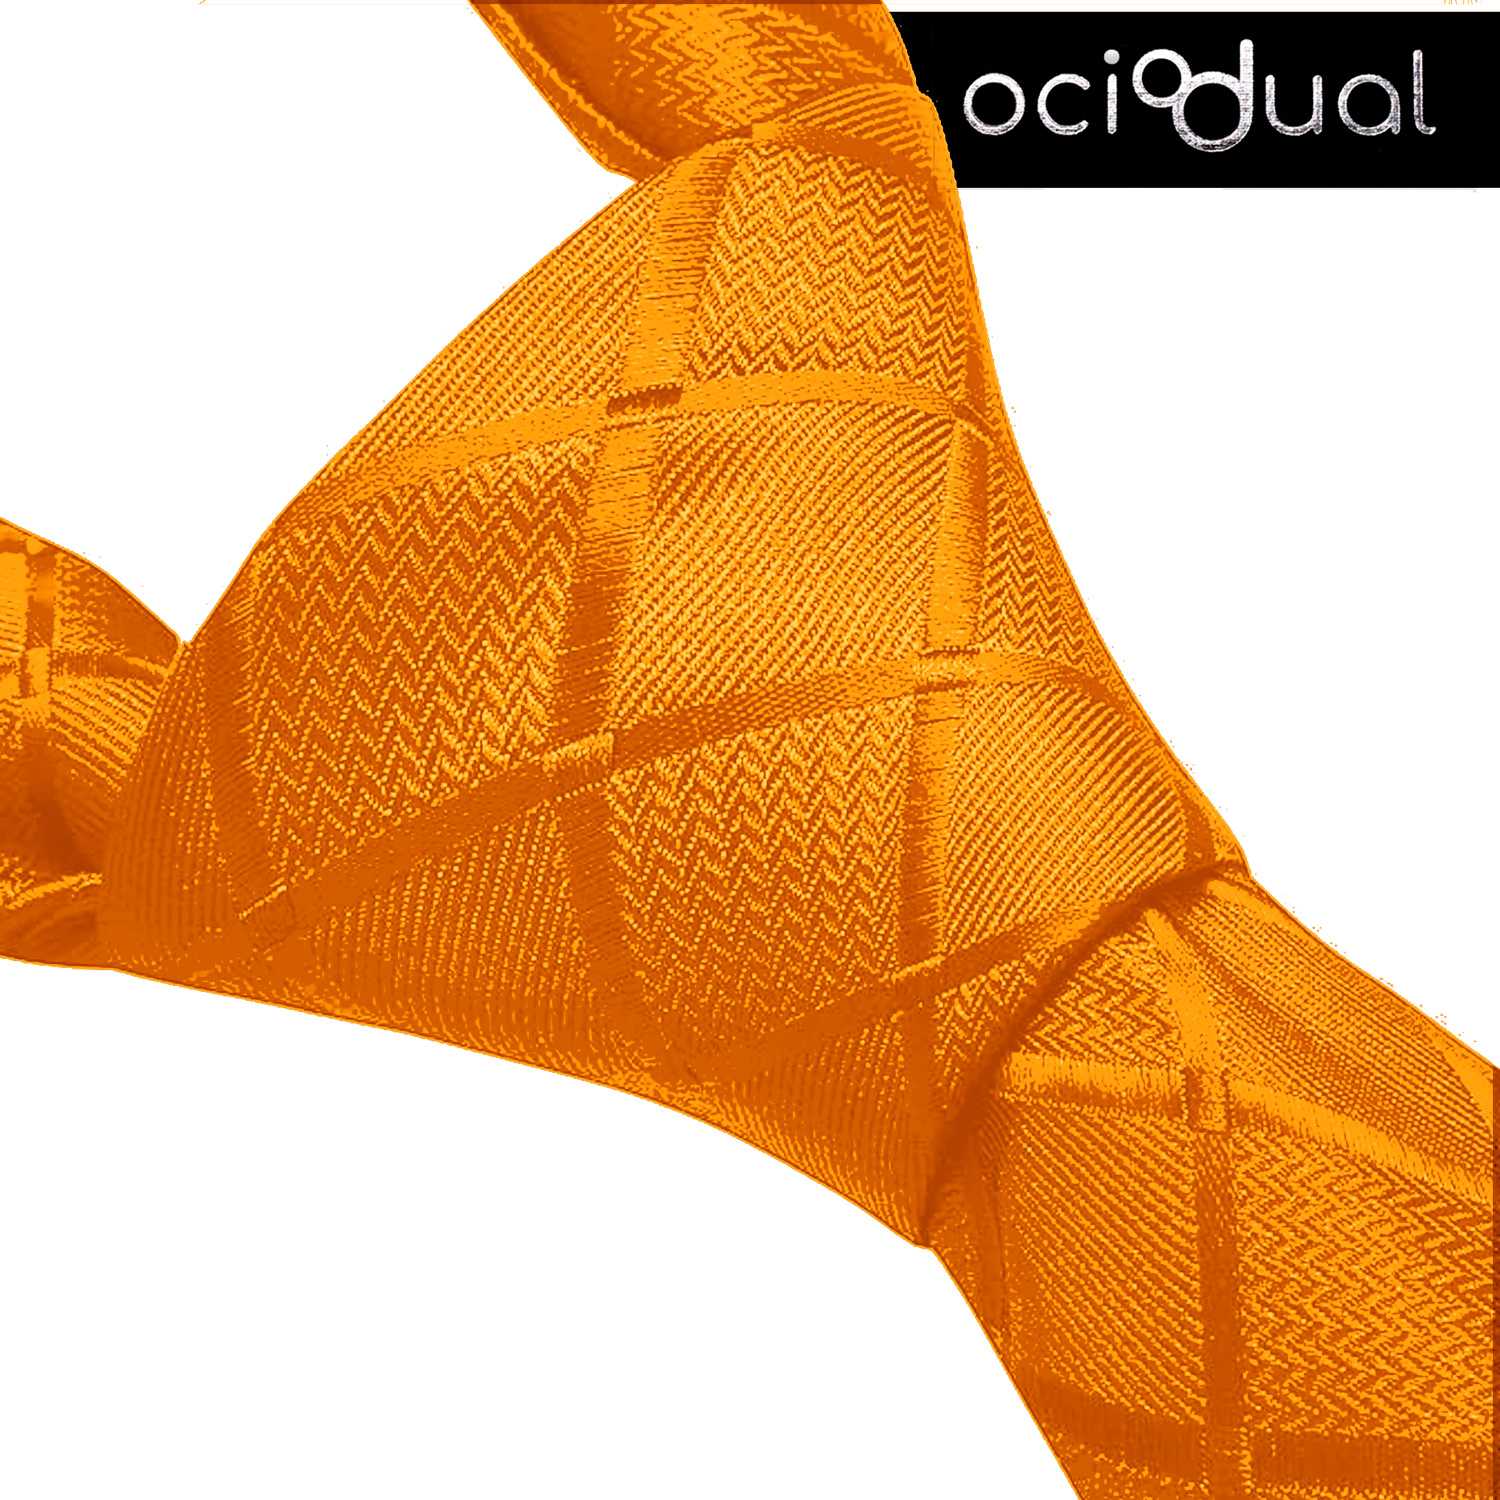 Corbata para Hombre, Conjunto de Corbata y Pañuelo de bolsillo, a Cuadros, Color Naranja, Hecha a mano, Elegante